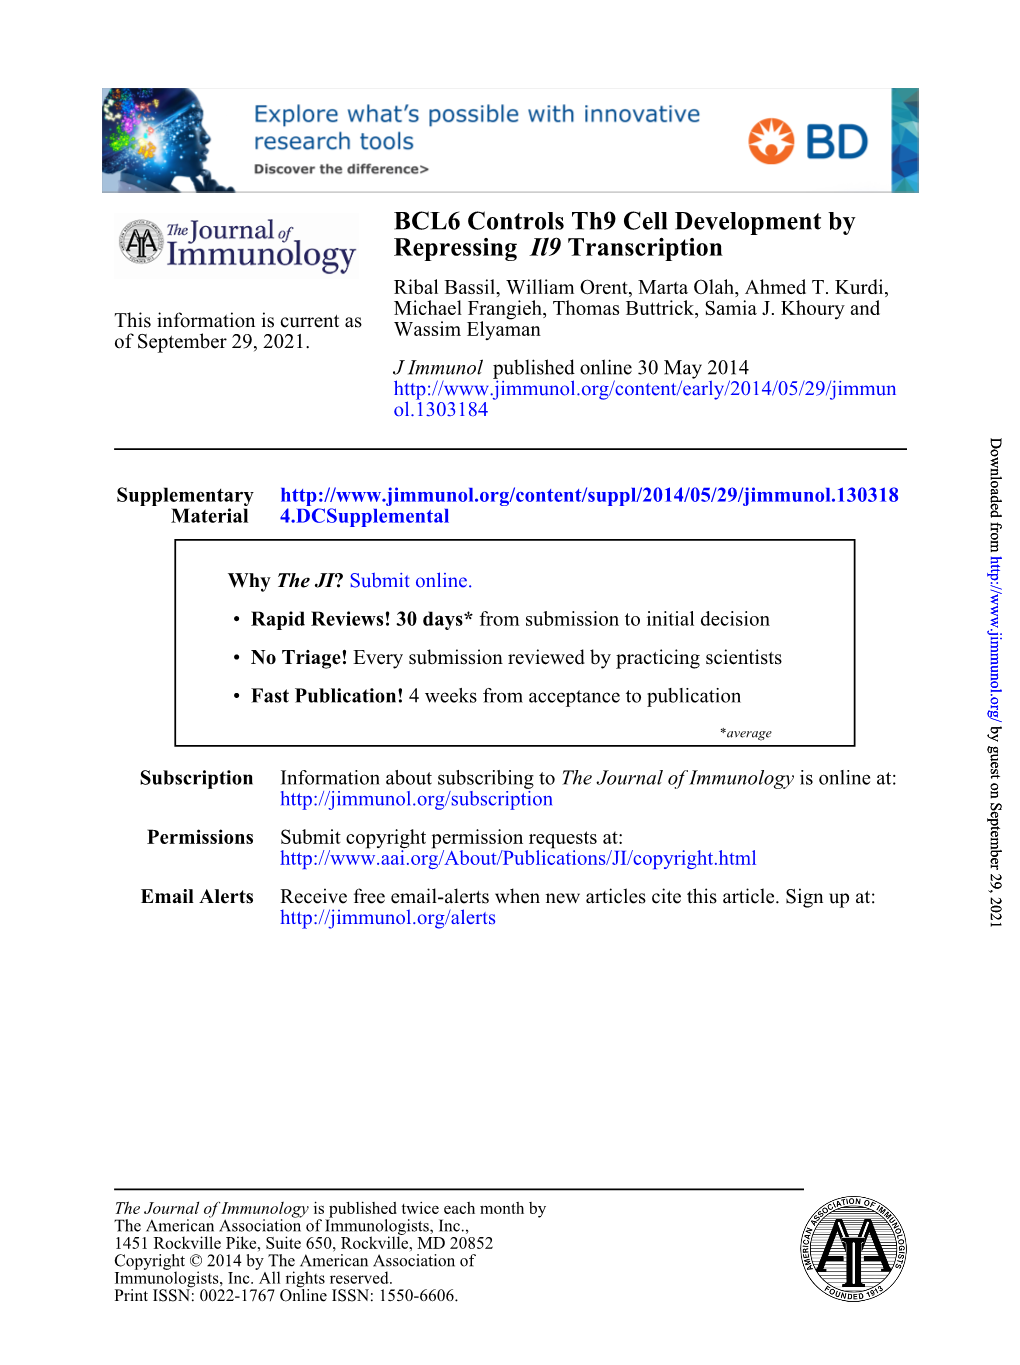 Transcription Il9 Repressing BCL6 Controls Th9 Cell Development By